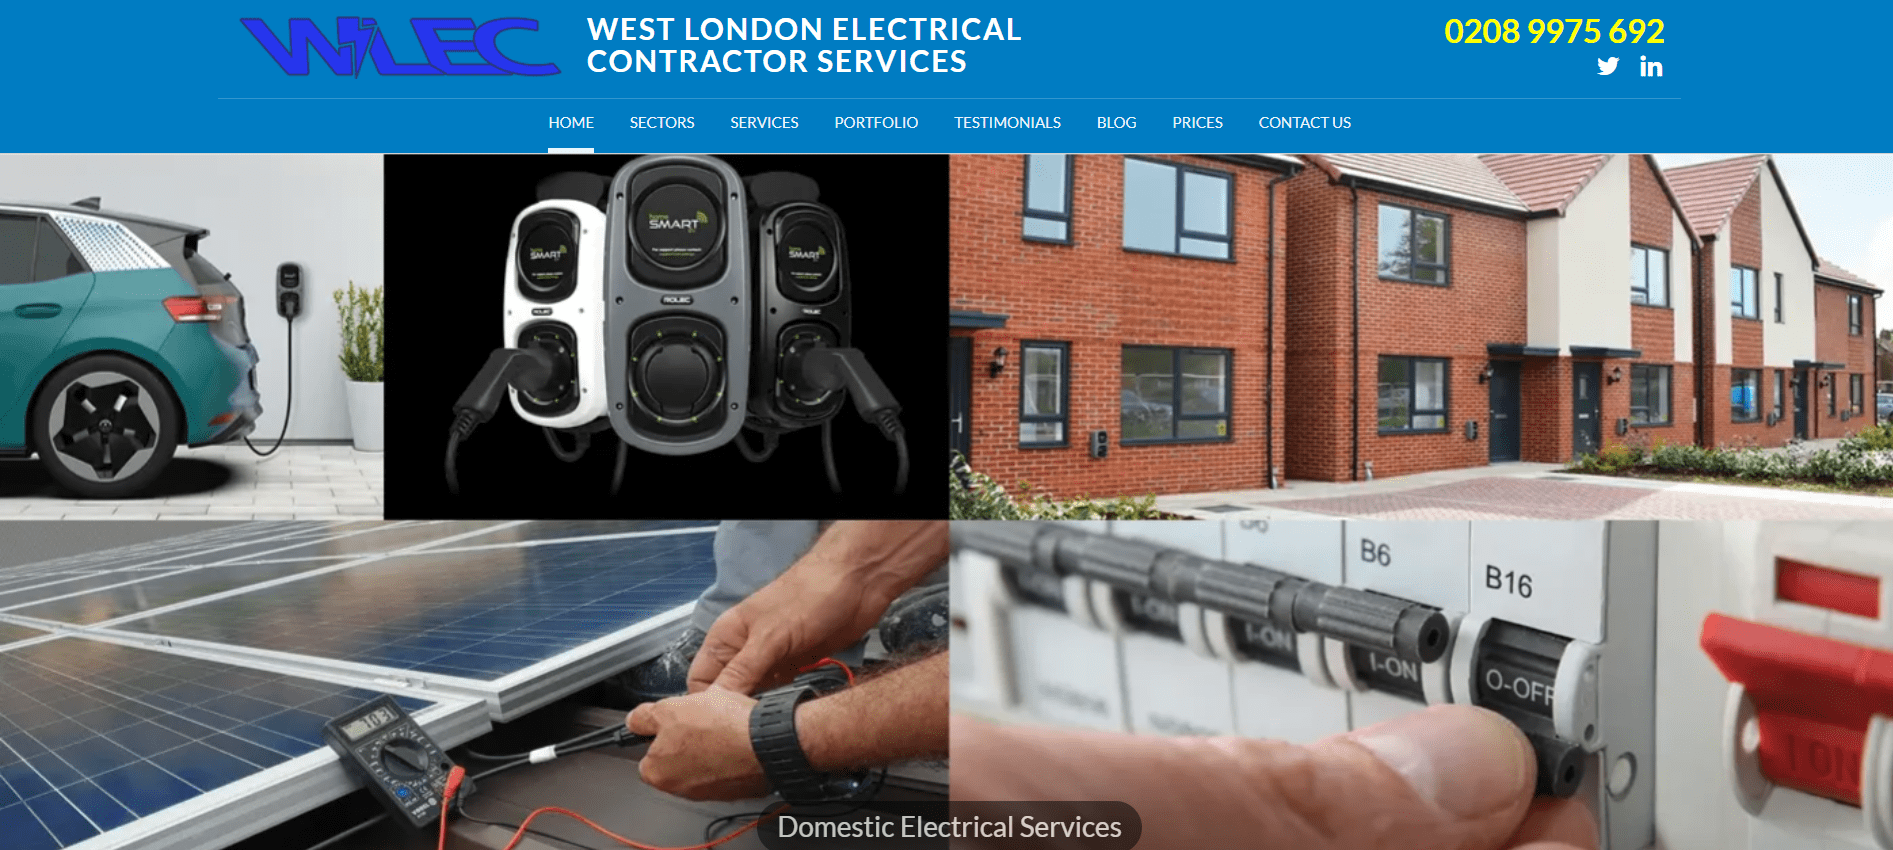 West London Electrical Contractor Services Ltd